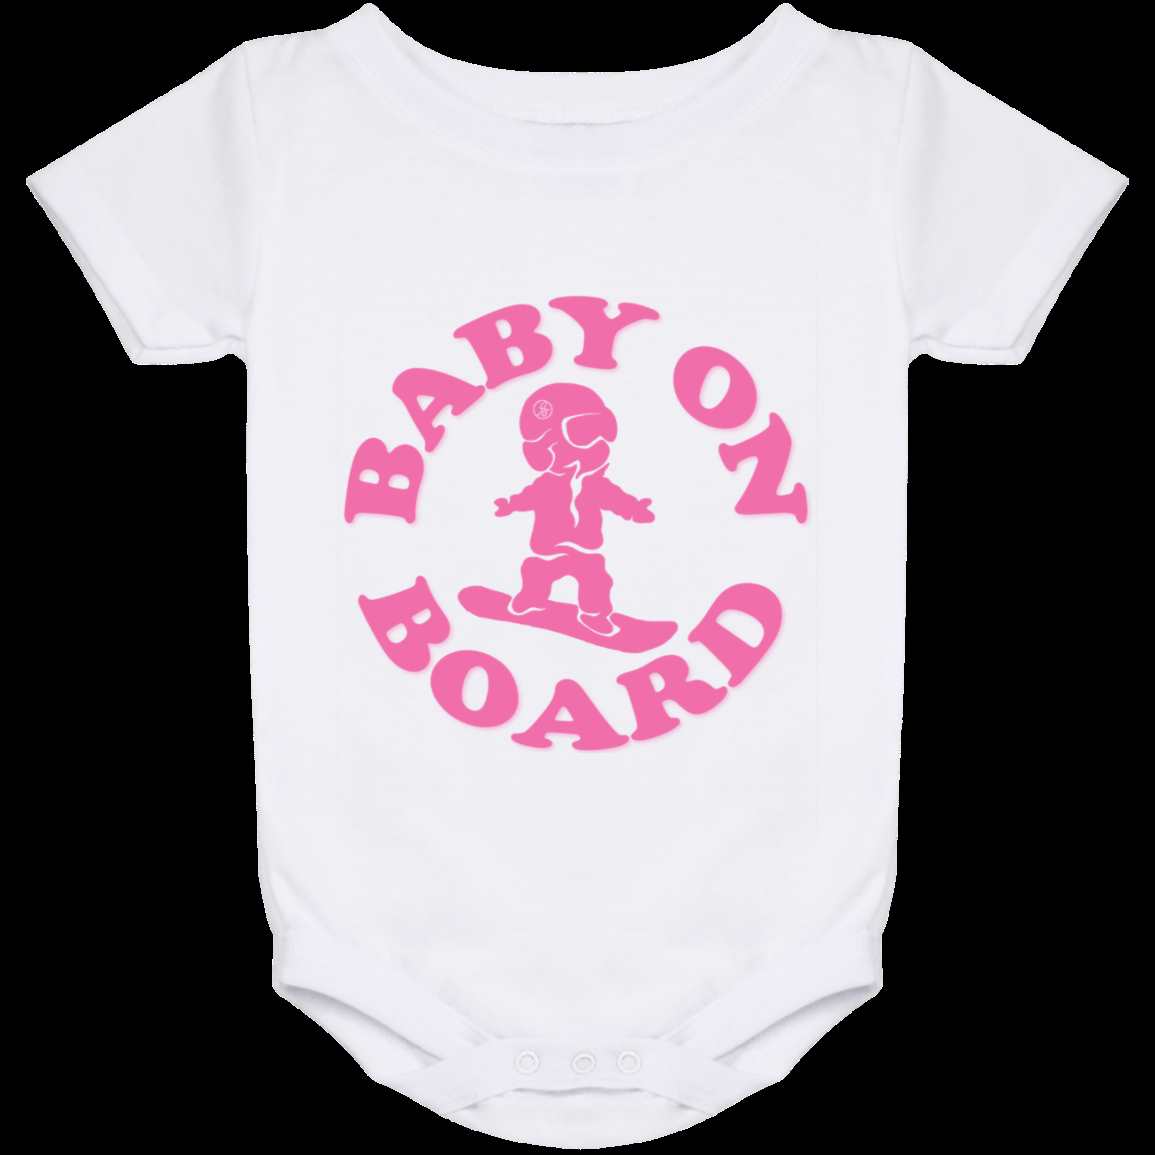 Baby On Board Pink Onesie 24 Month - ONE RUN SPORTS